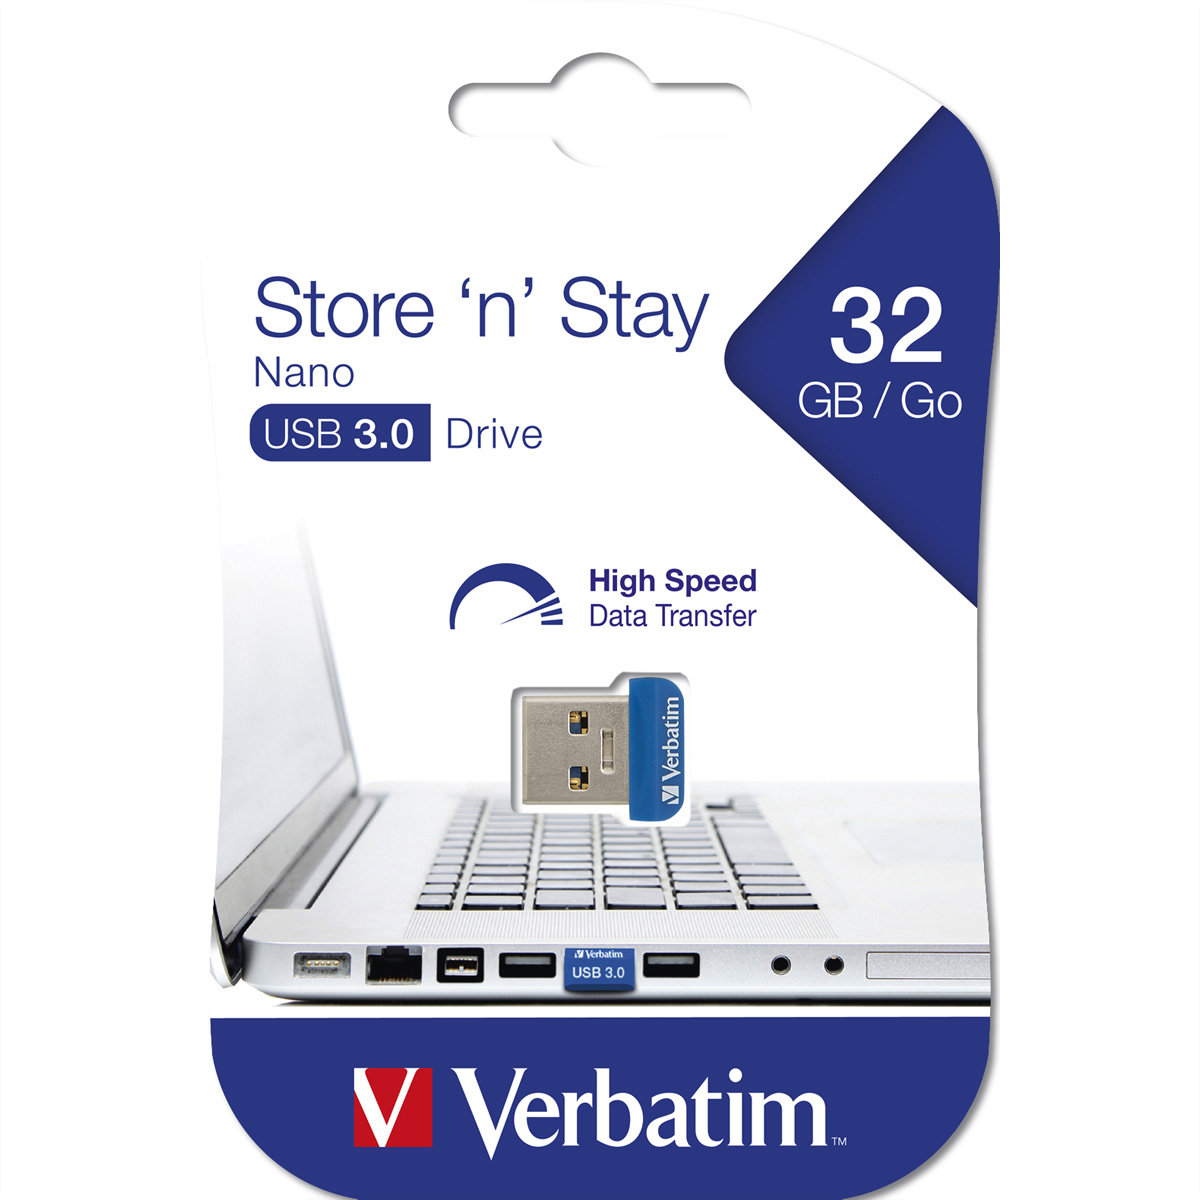 VERBATIM Store'N' Stay Nano USB Drive